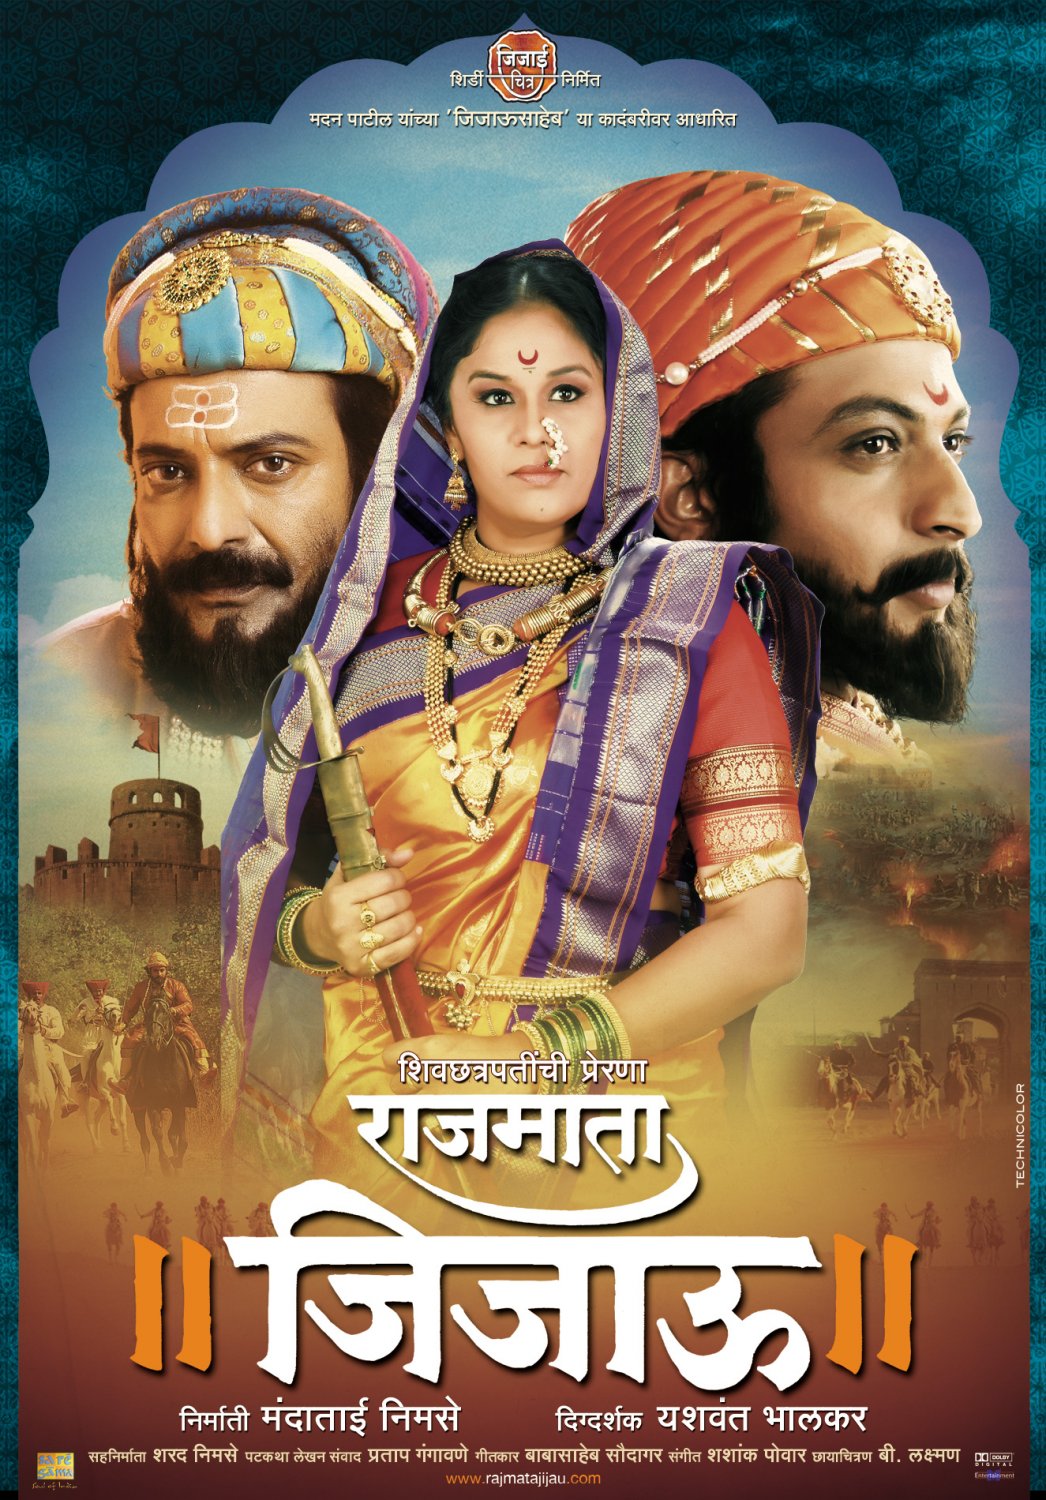 Extra Large Movie Poster Image for Rajmata Jijau (#3 of 5)